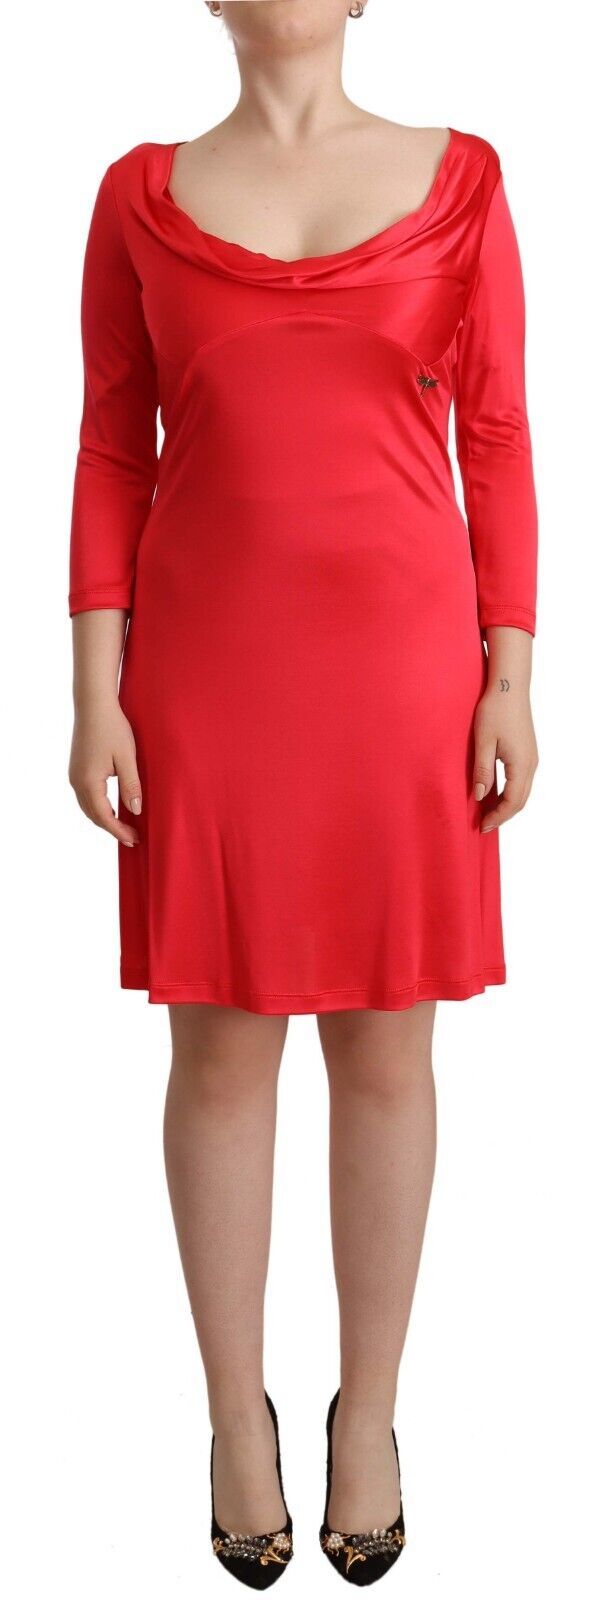 John Galliano Elegant Red Knee-Length Sheath Dress